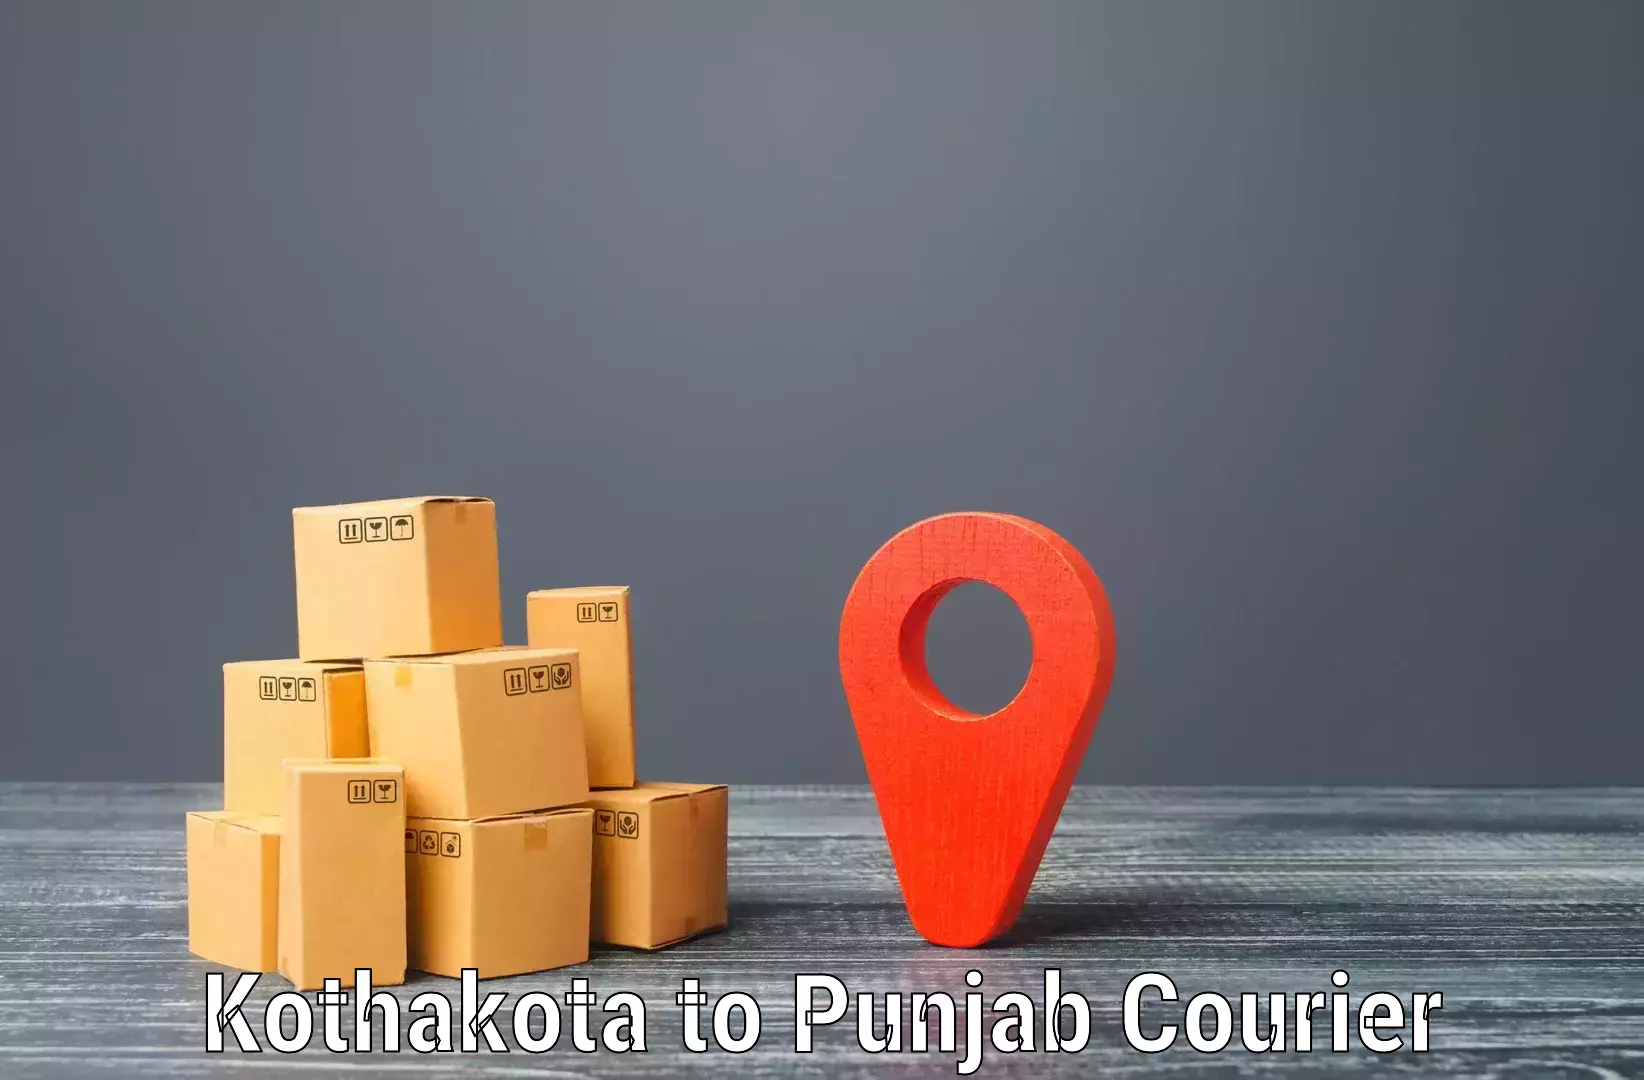 Courier service comparison Kothakota to Mohali